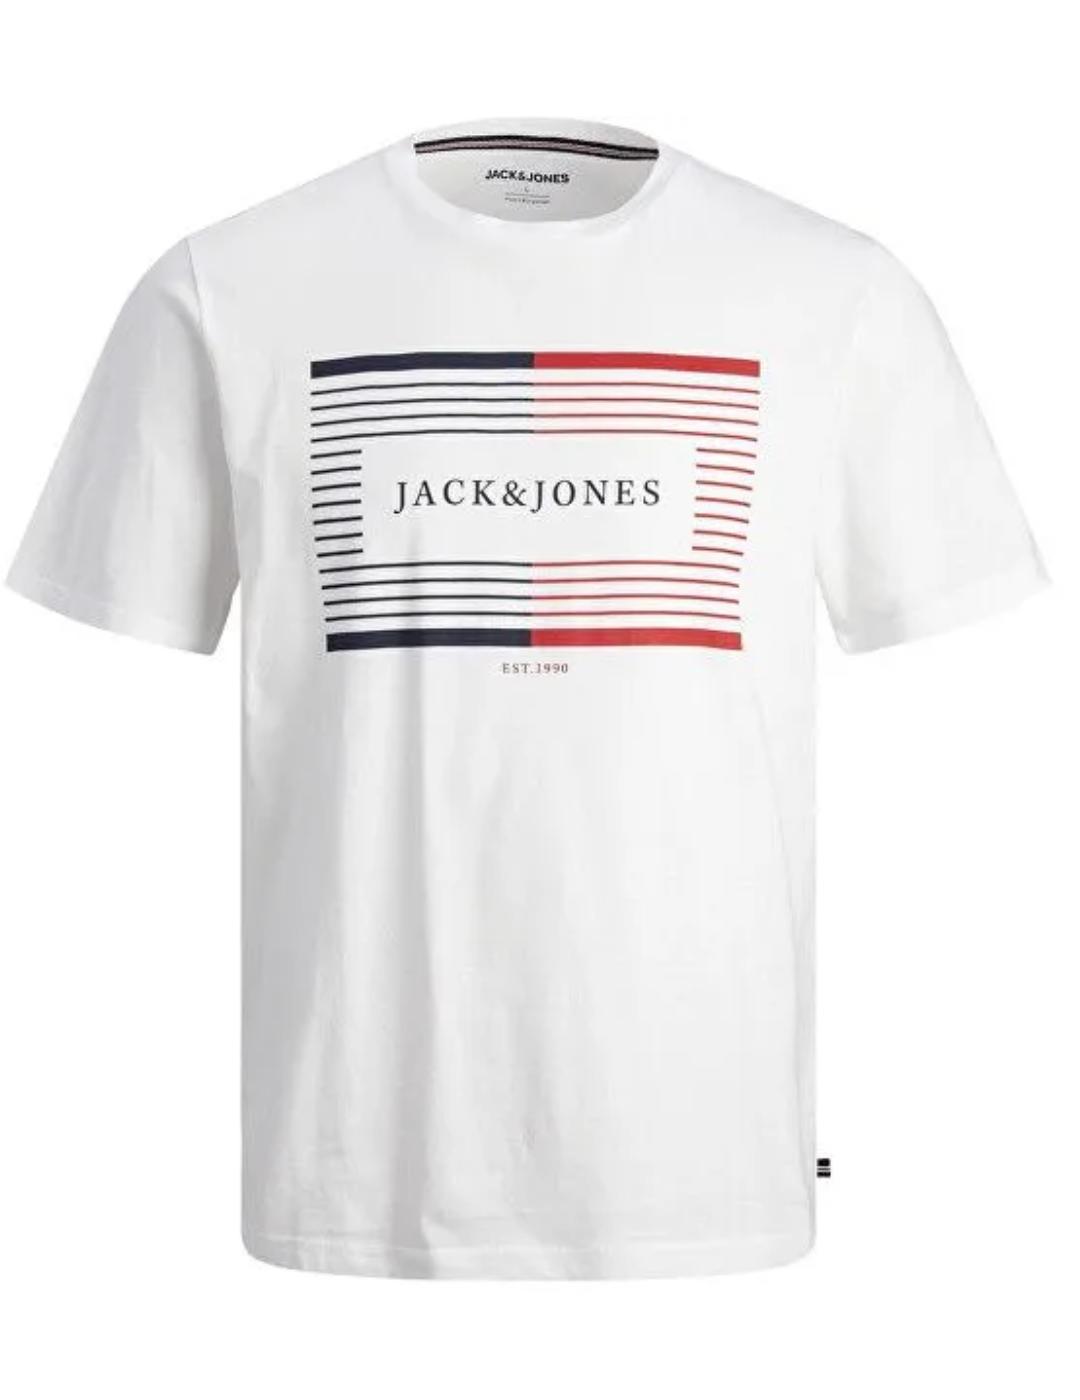 Camiseta Jack&Jones Cyrus blanco manga corta para hombre